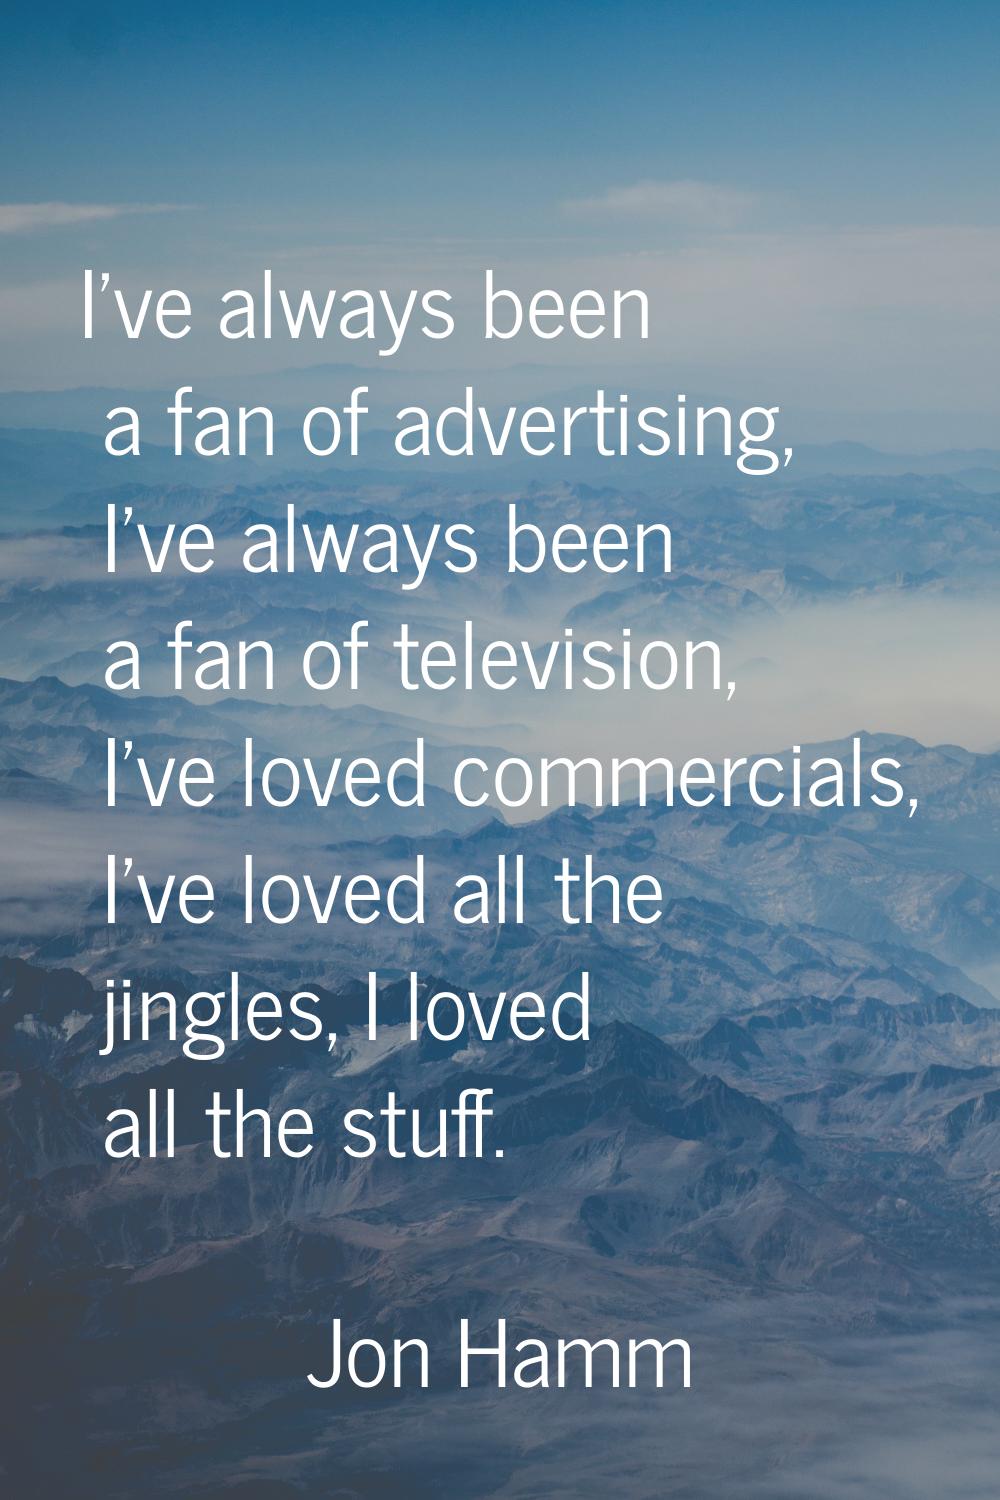 I've always been a fan of advertising, I've always been a fan of television, I've loved commercials